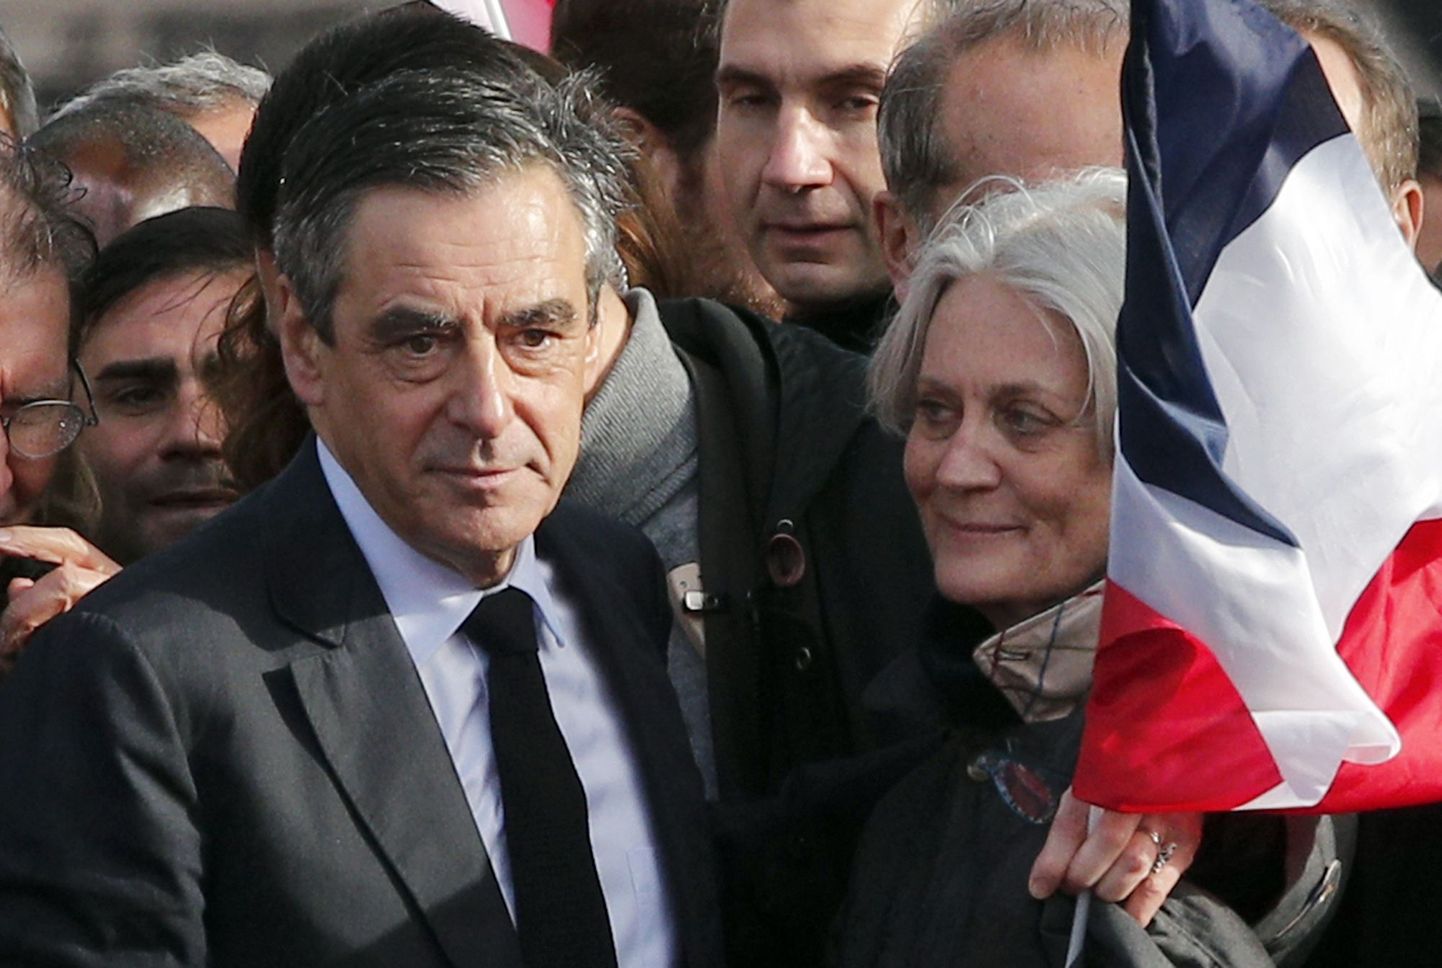 Prantsuse vabariiklaste presidendikandidaat François Fillon naise Penelopega.